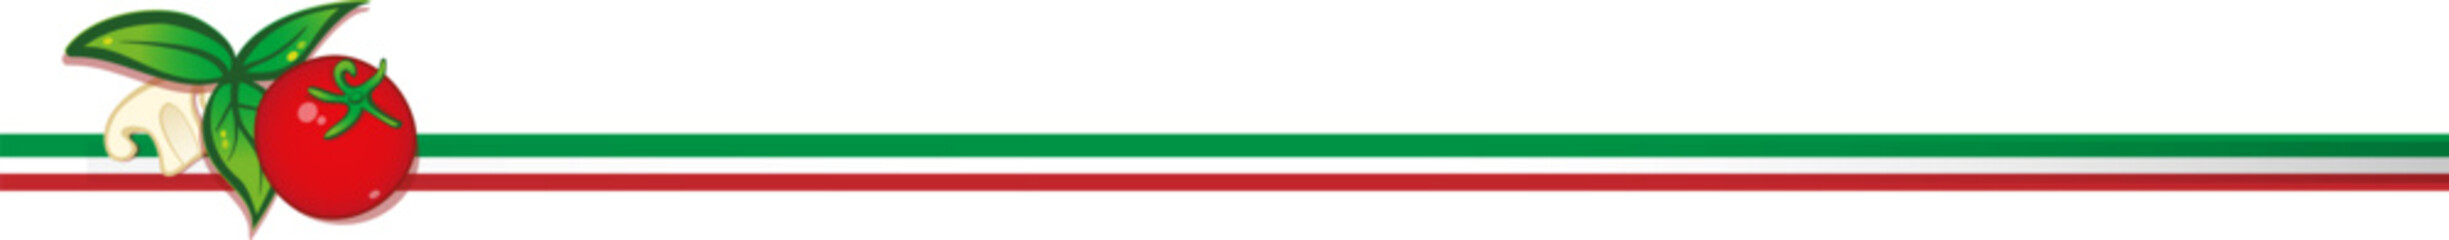 italian flag banner horizontal with tomato basil and mushrooms